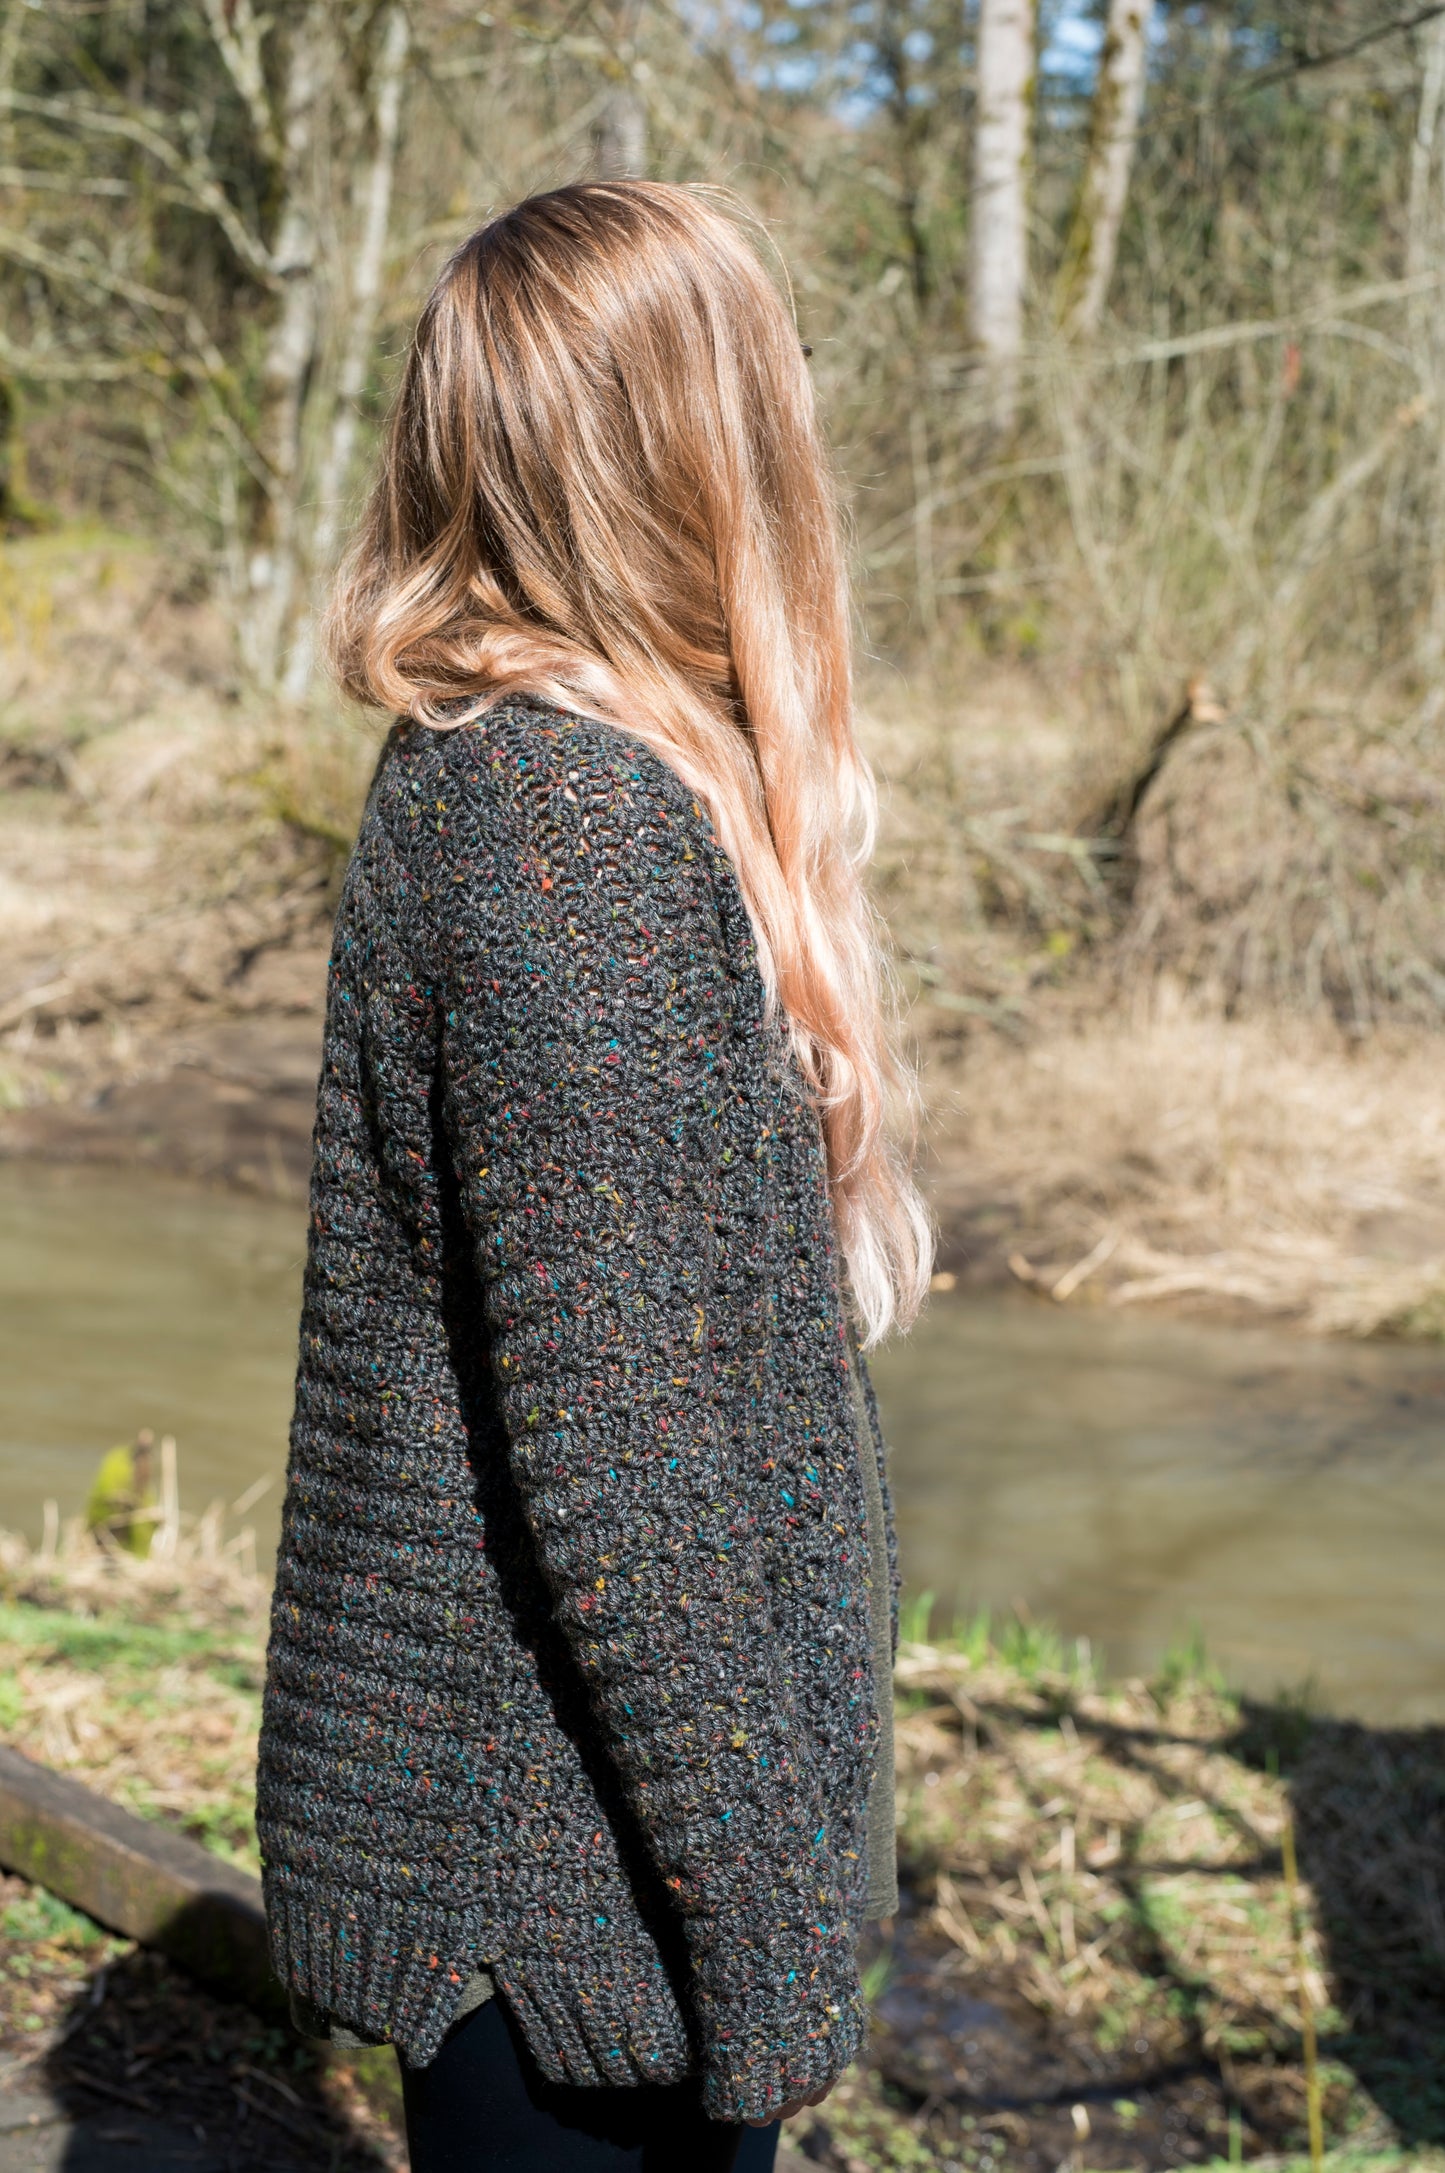 Crochet Pattern: The Starling Cardigan